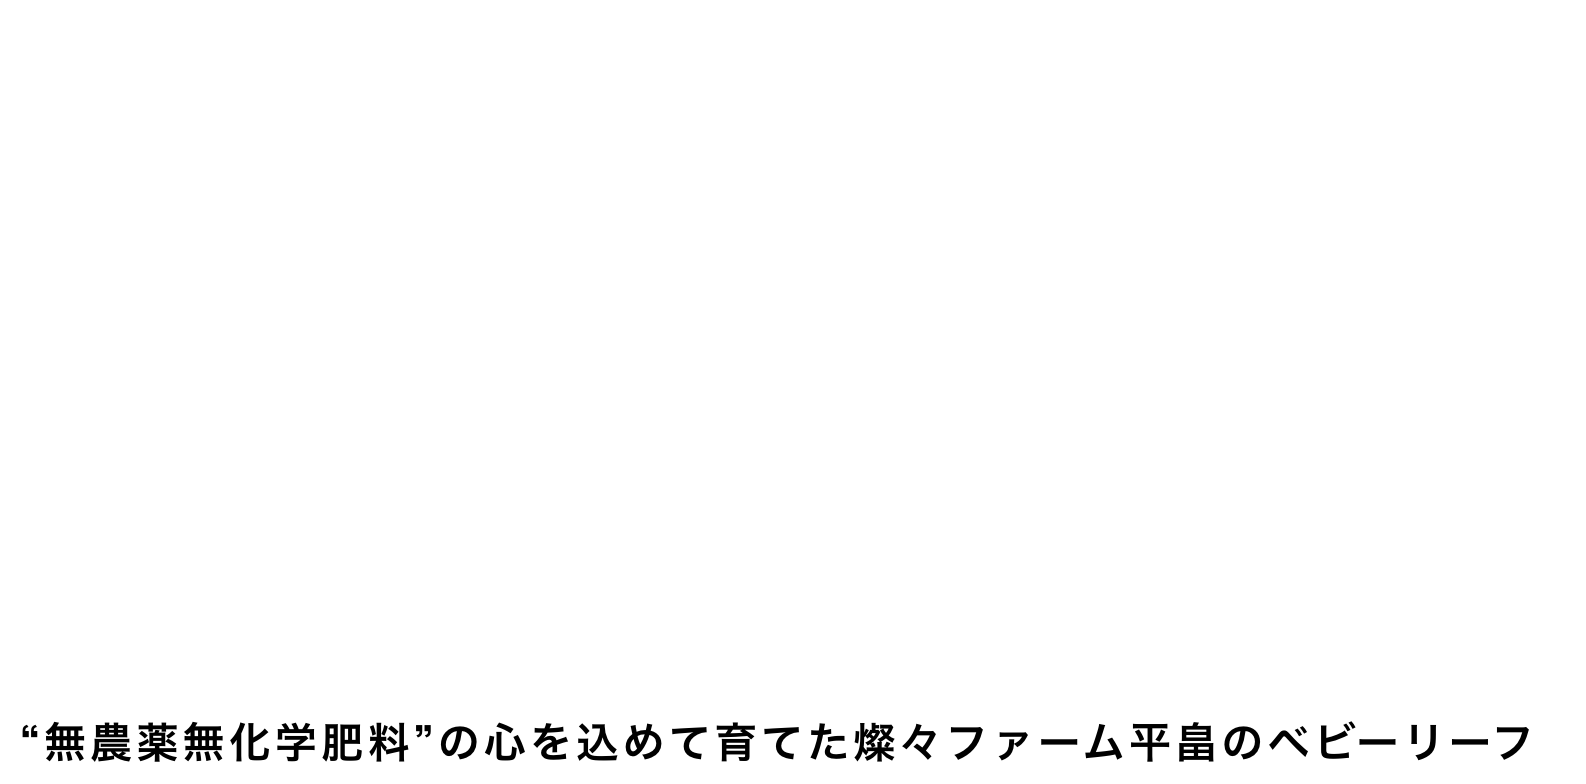 Let's eat fresh baby leaves!